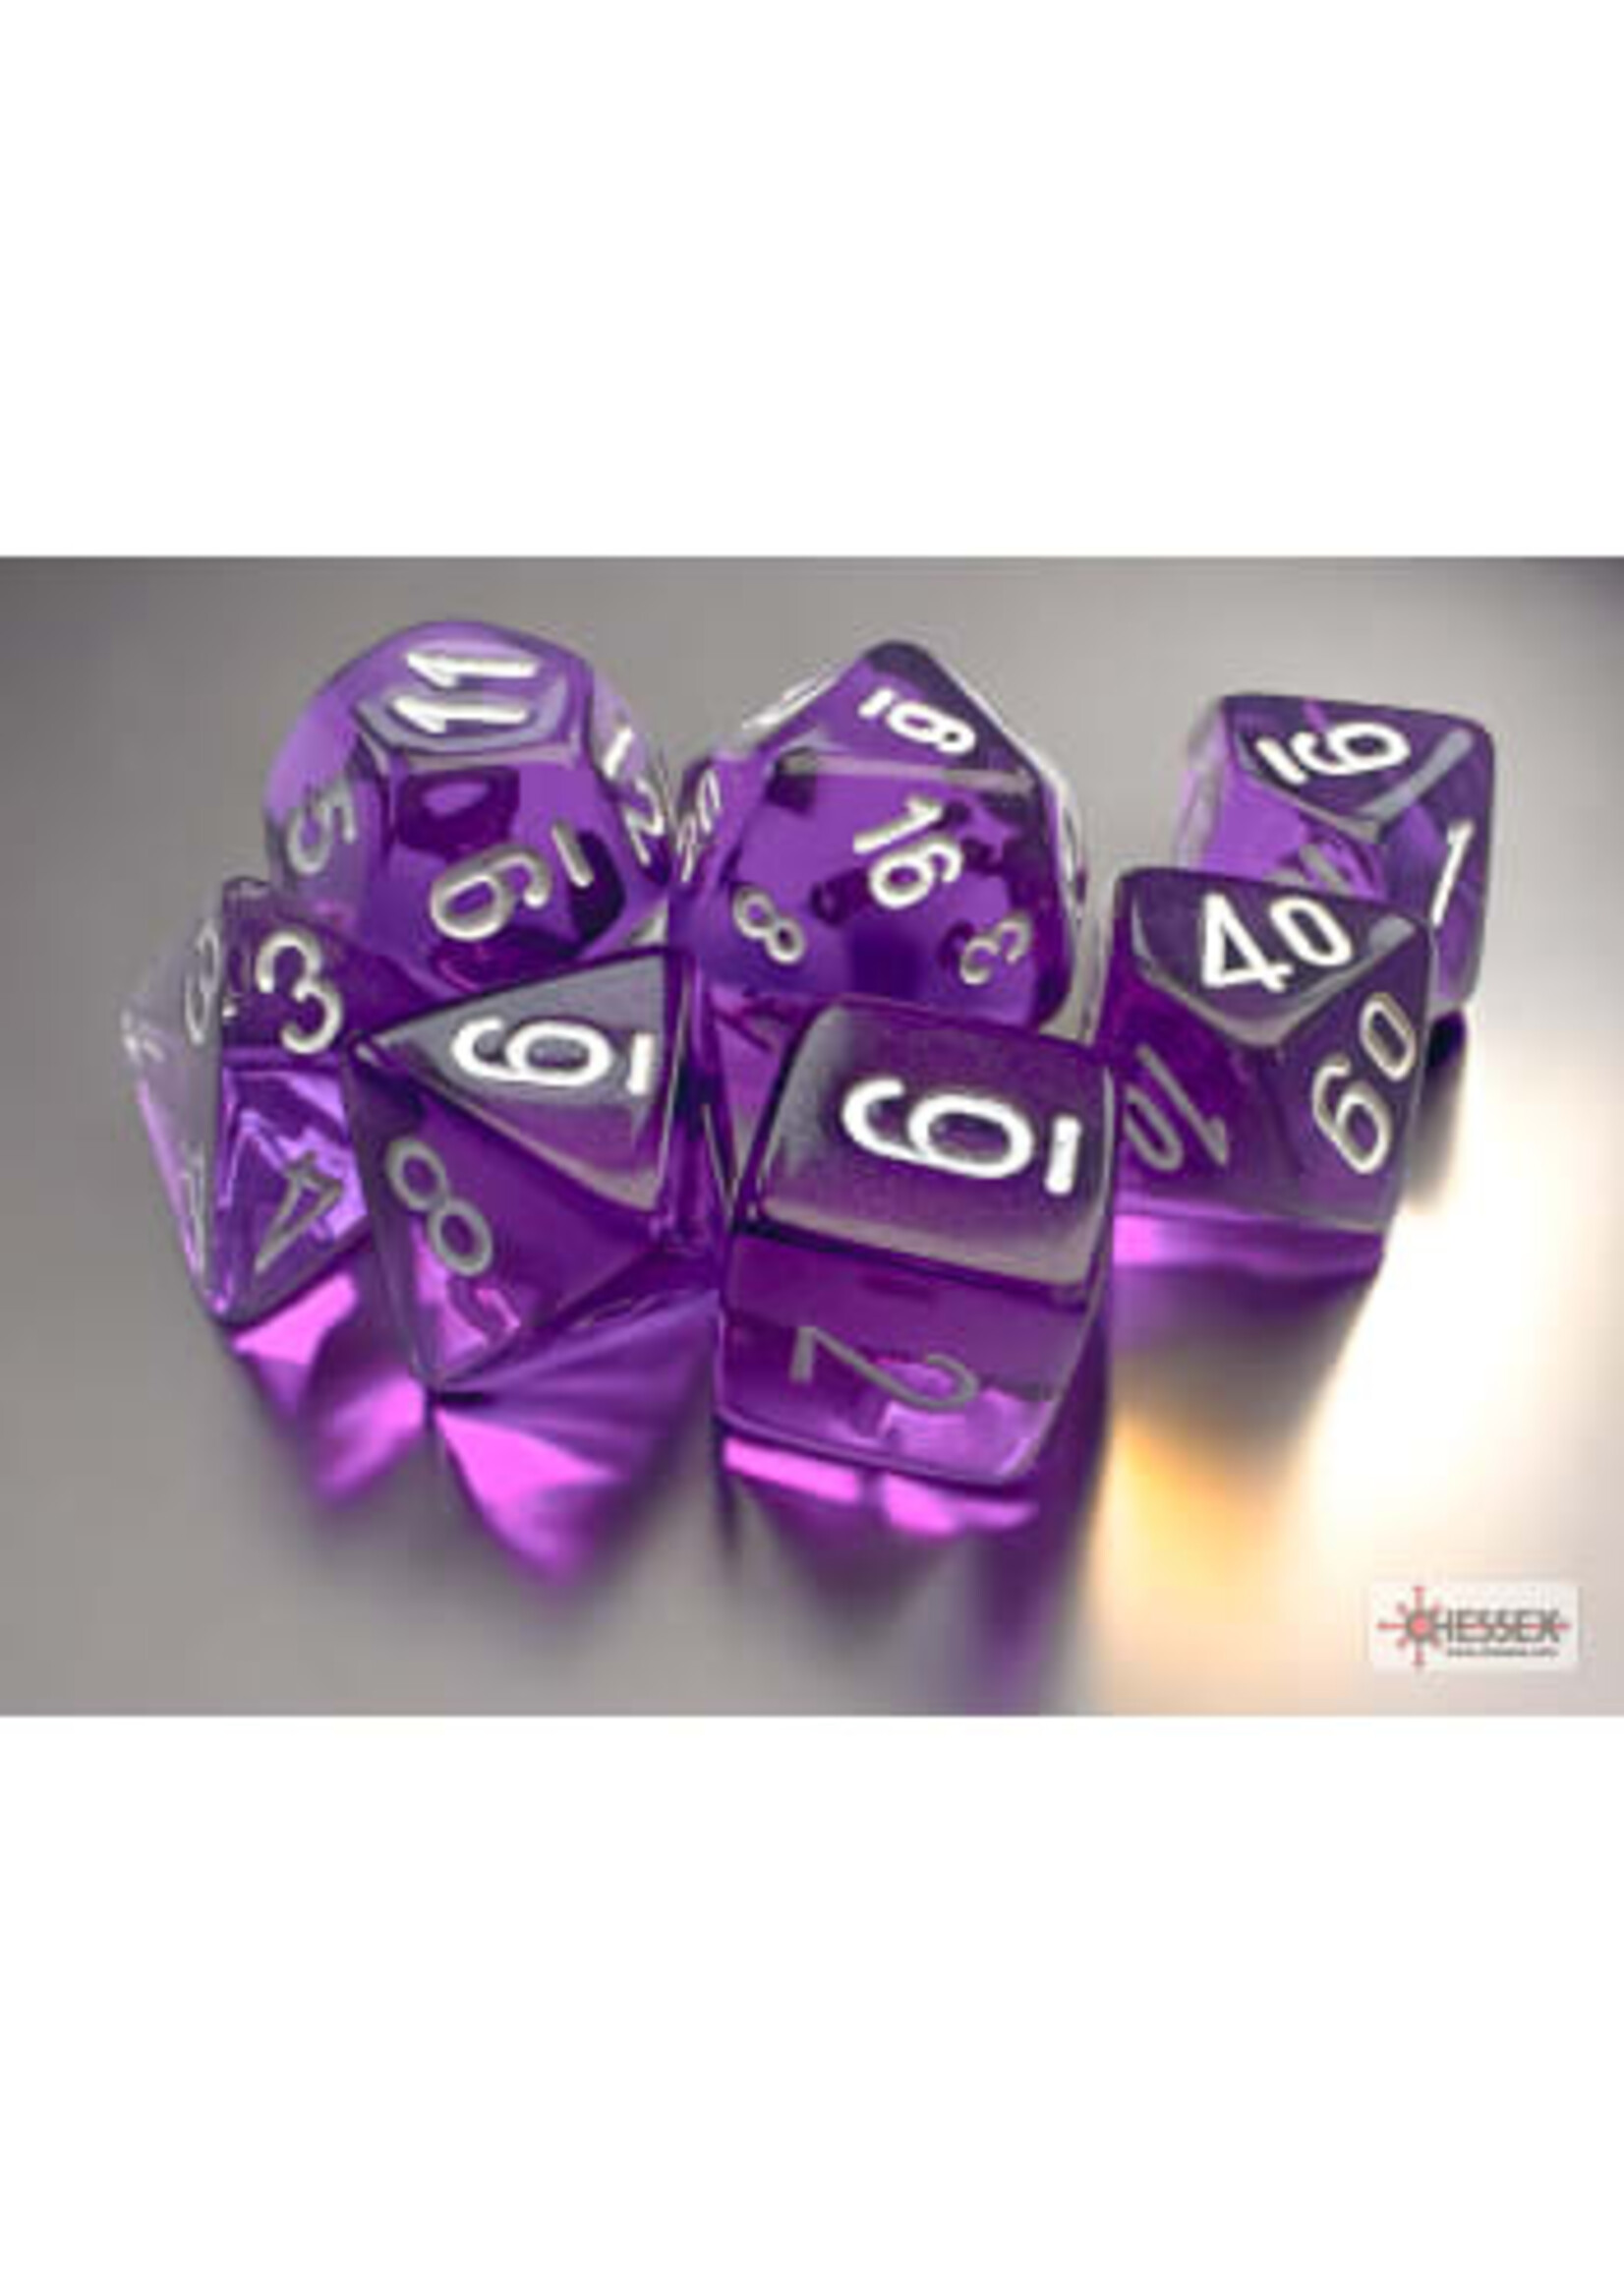 Chessex Translucent Mini 7 Set: Purple w/ white